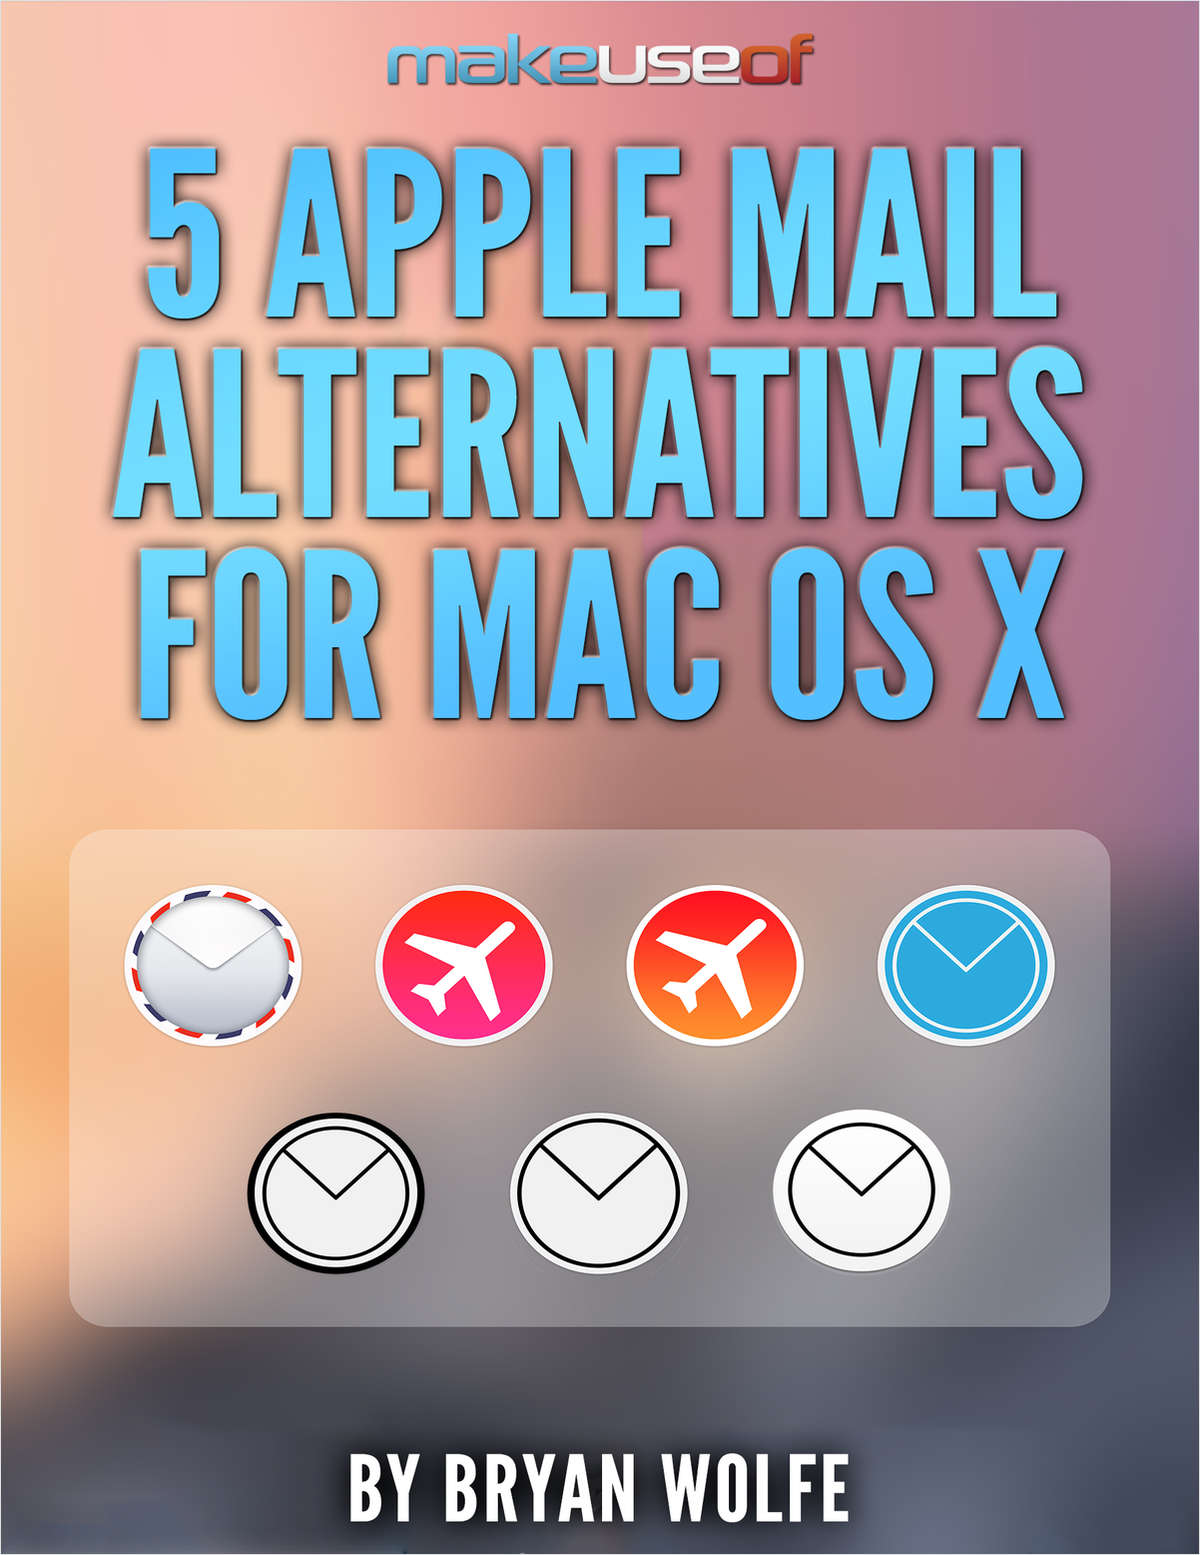 5 Apple Mail Alternatives for Mac OS X